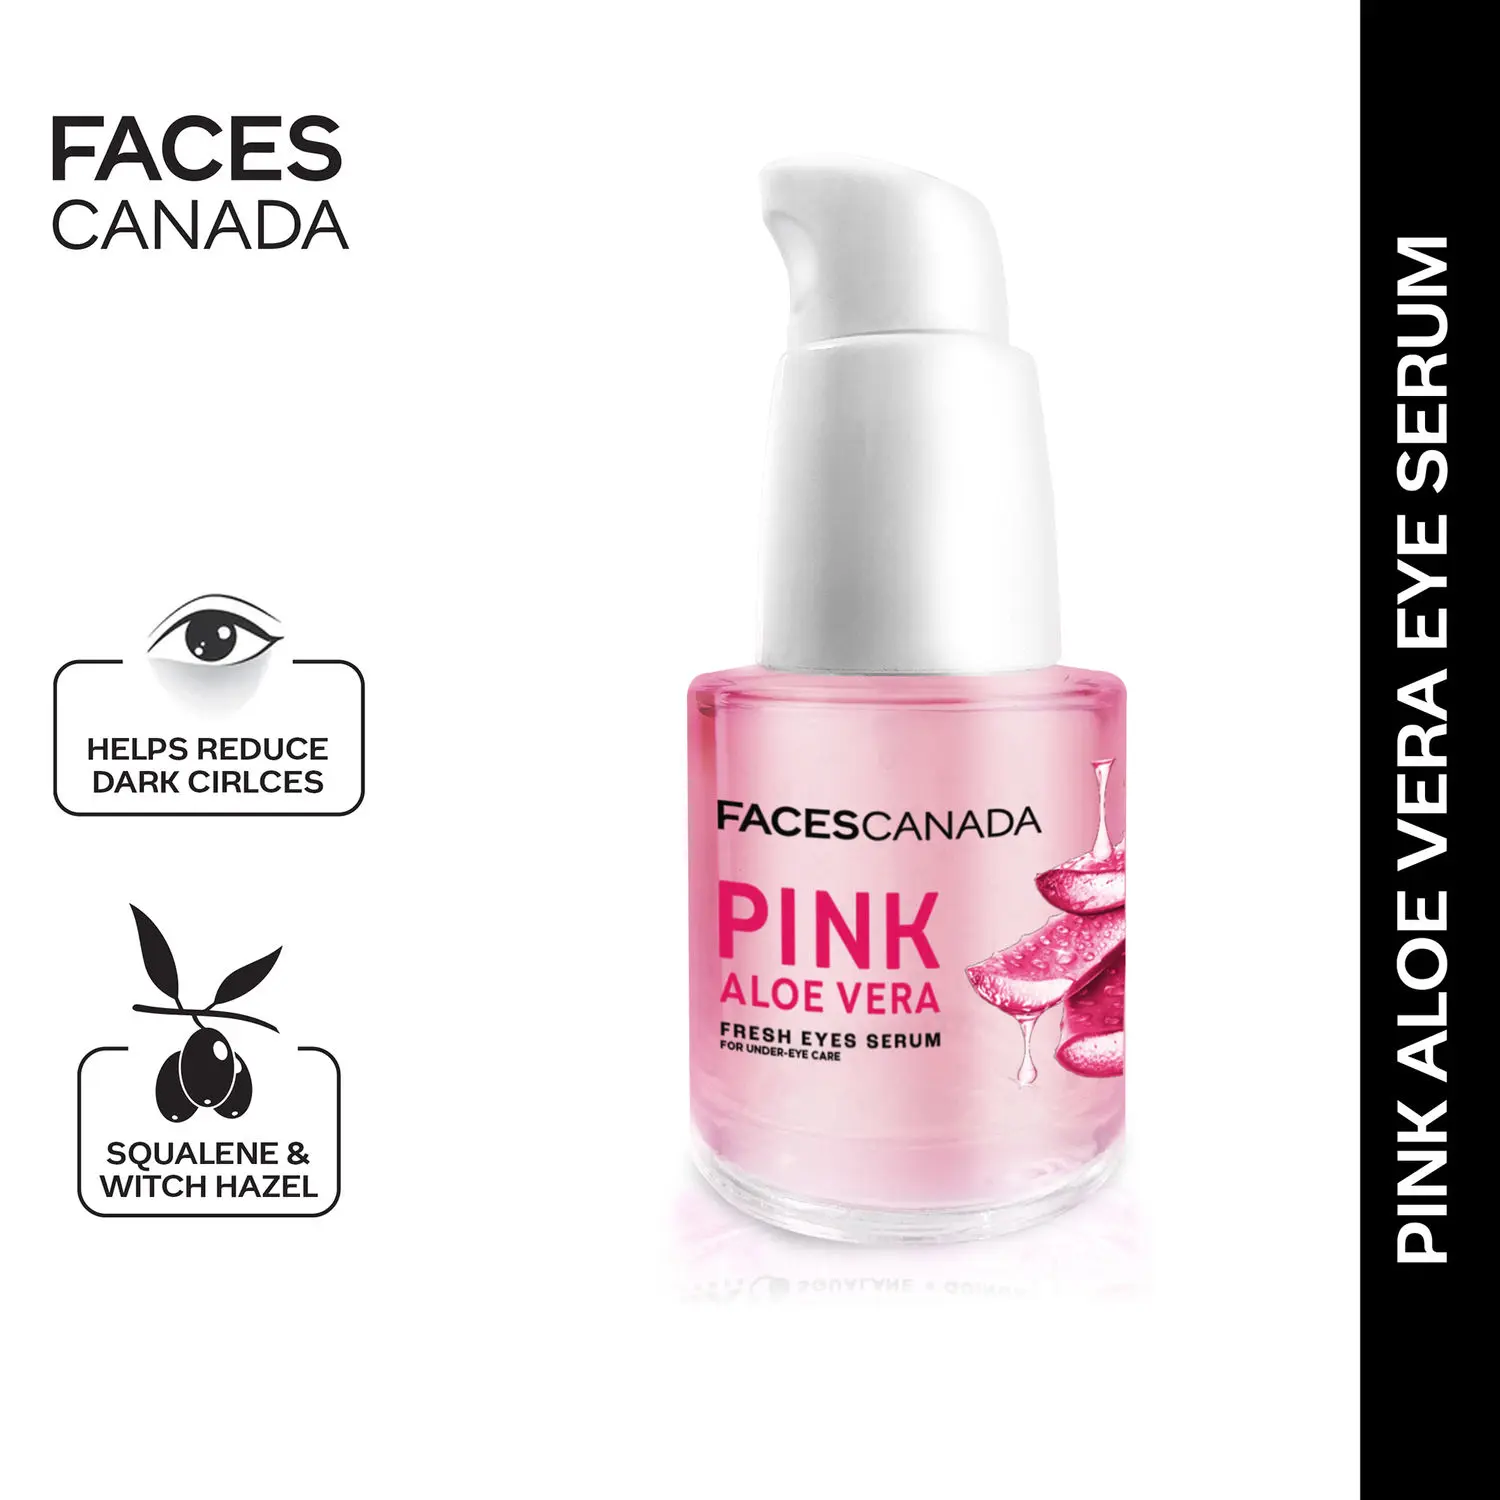 Faces Canada Pink Aloe Vera Fresh Eyes Serum I Anti-ageing I Squalene I Witch Hazel I Quinoa Extracts I Intense Hydration I Cruelty-free I 15 ml